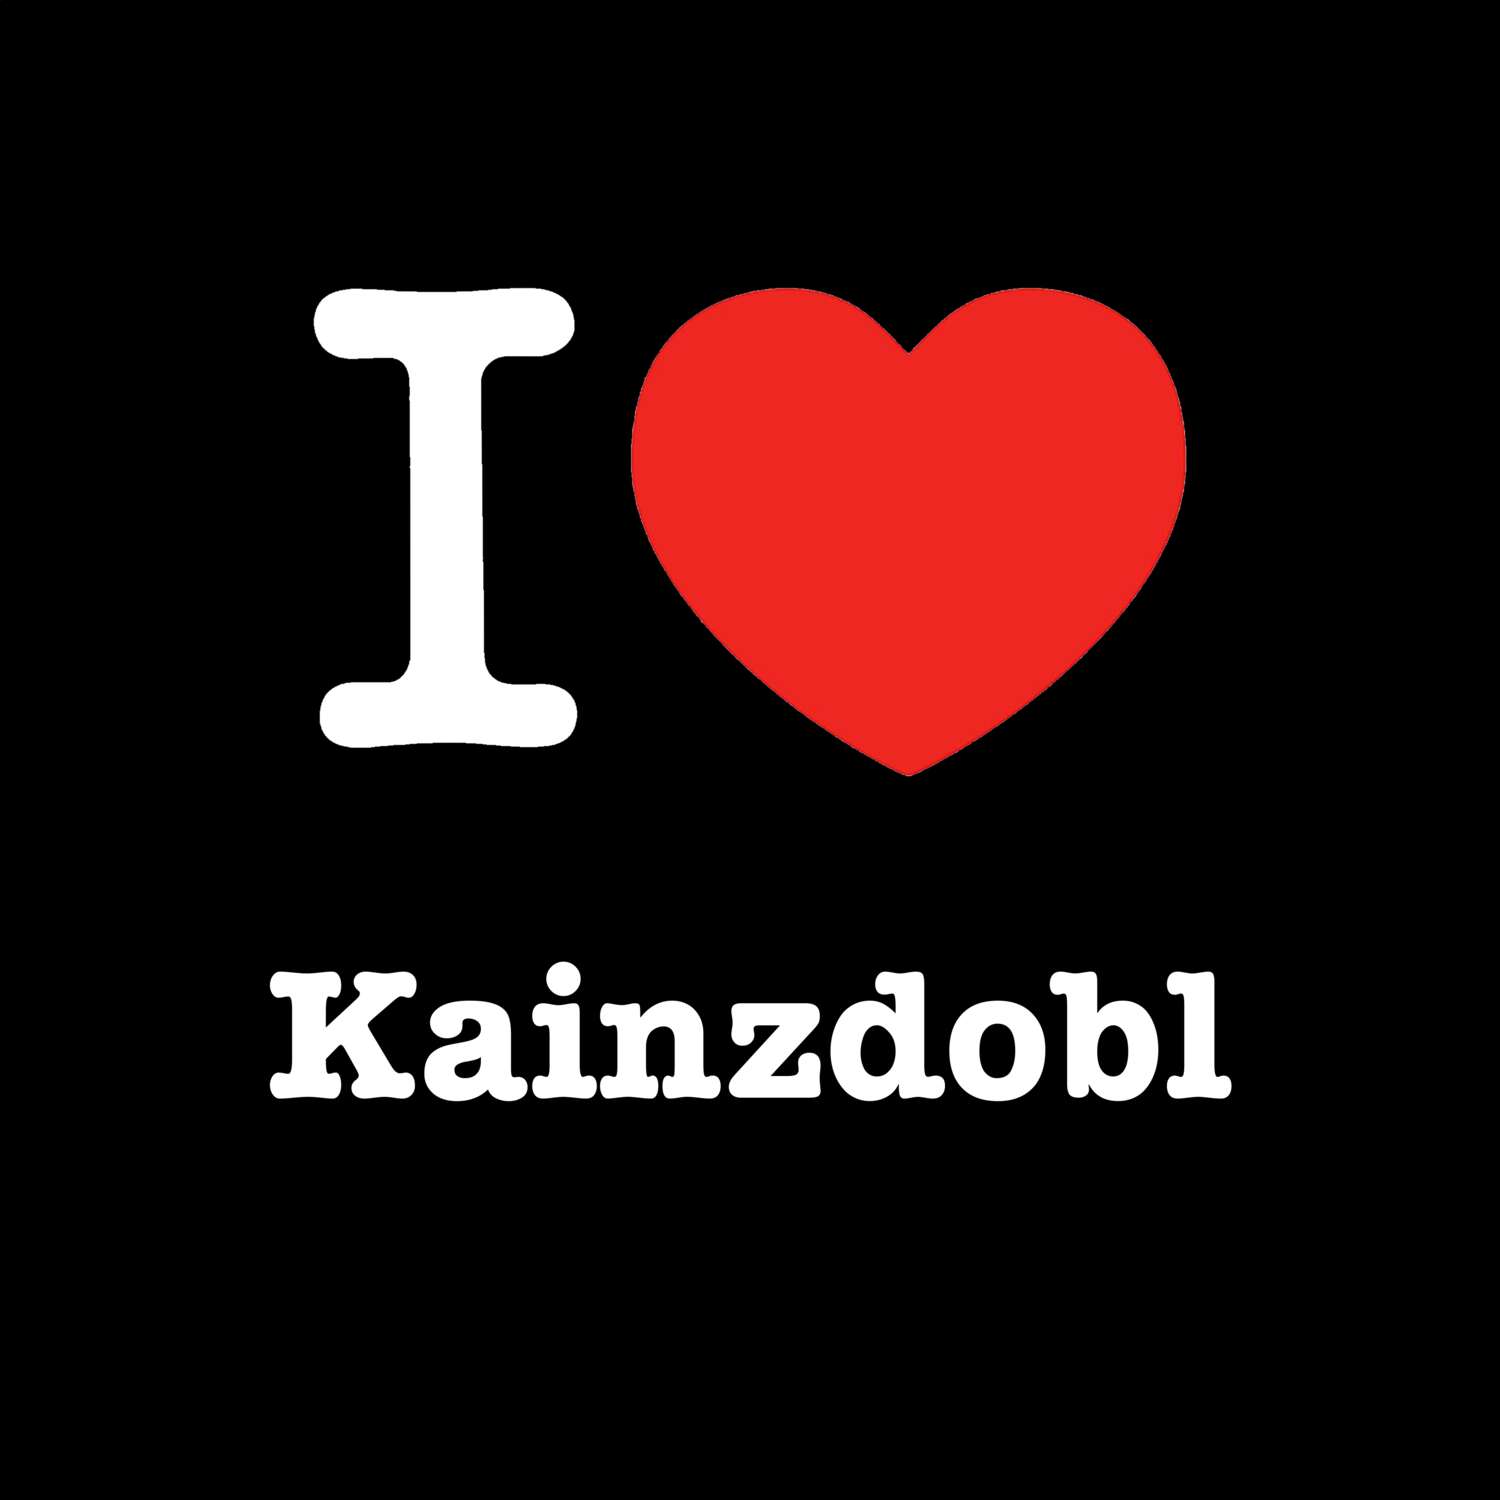 Kainzdobl T-Shirt »I love«